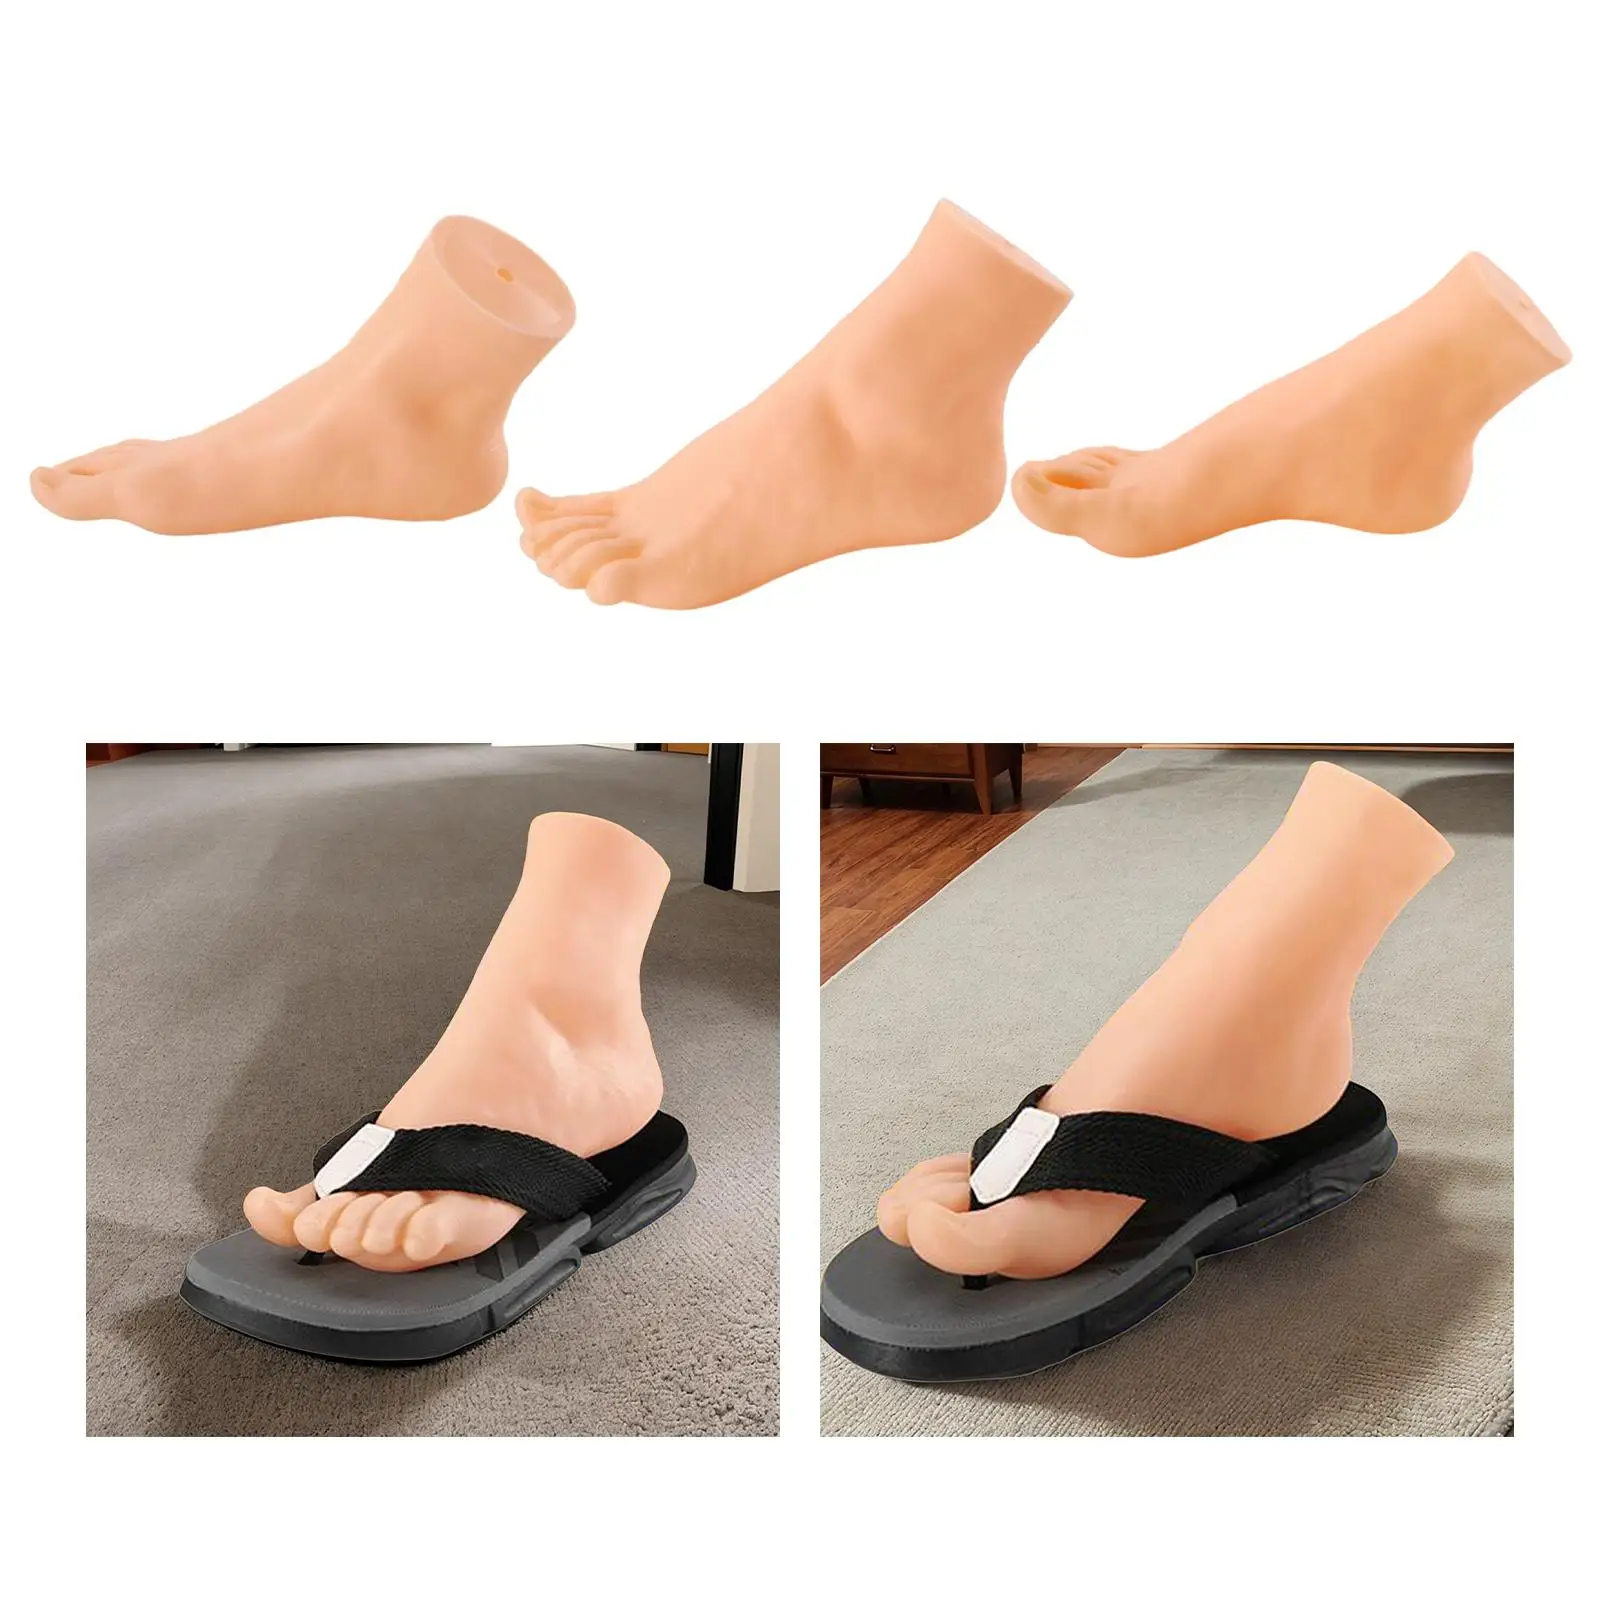 Foot Model Mannequin Foot Display Simulation Ankle Bracelet Shoes Sock Display